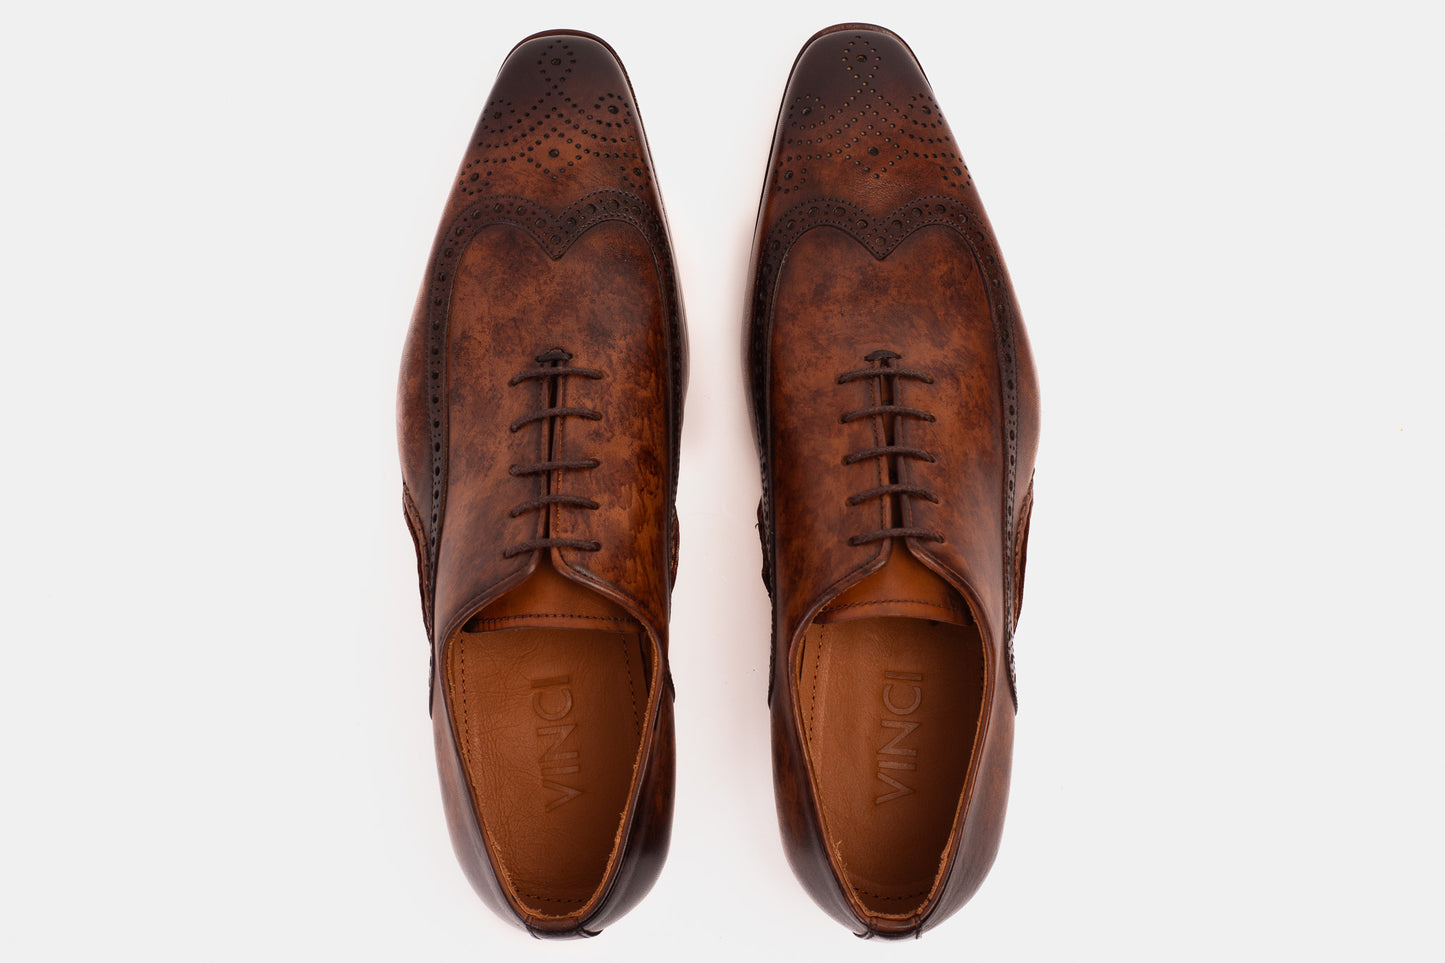 The Royal Hand Craft Brown Wingtip Oxford Men Shoe